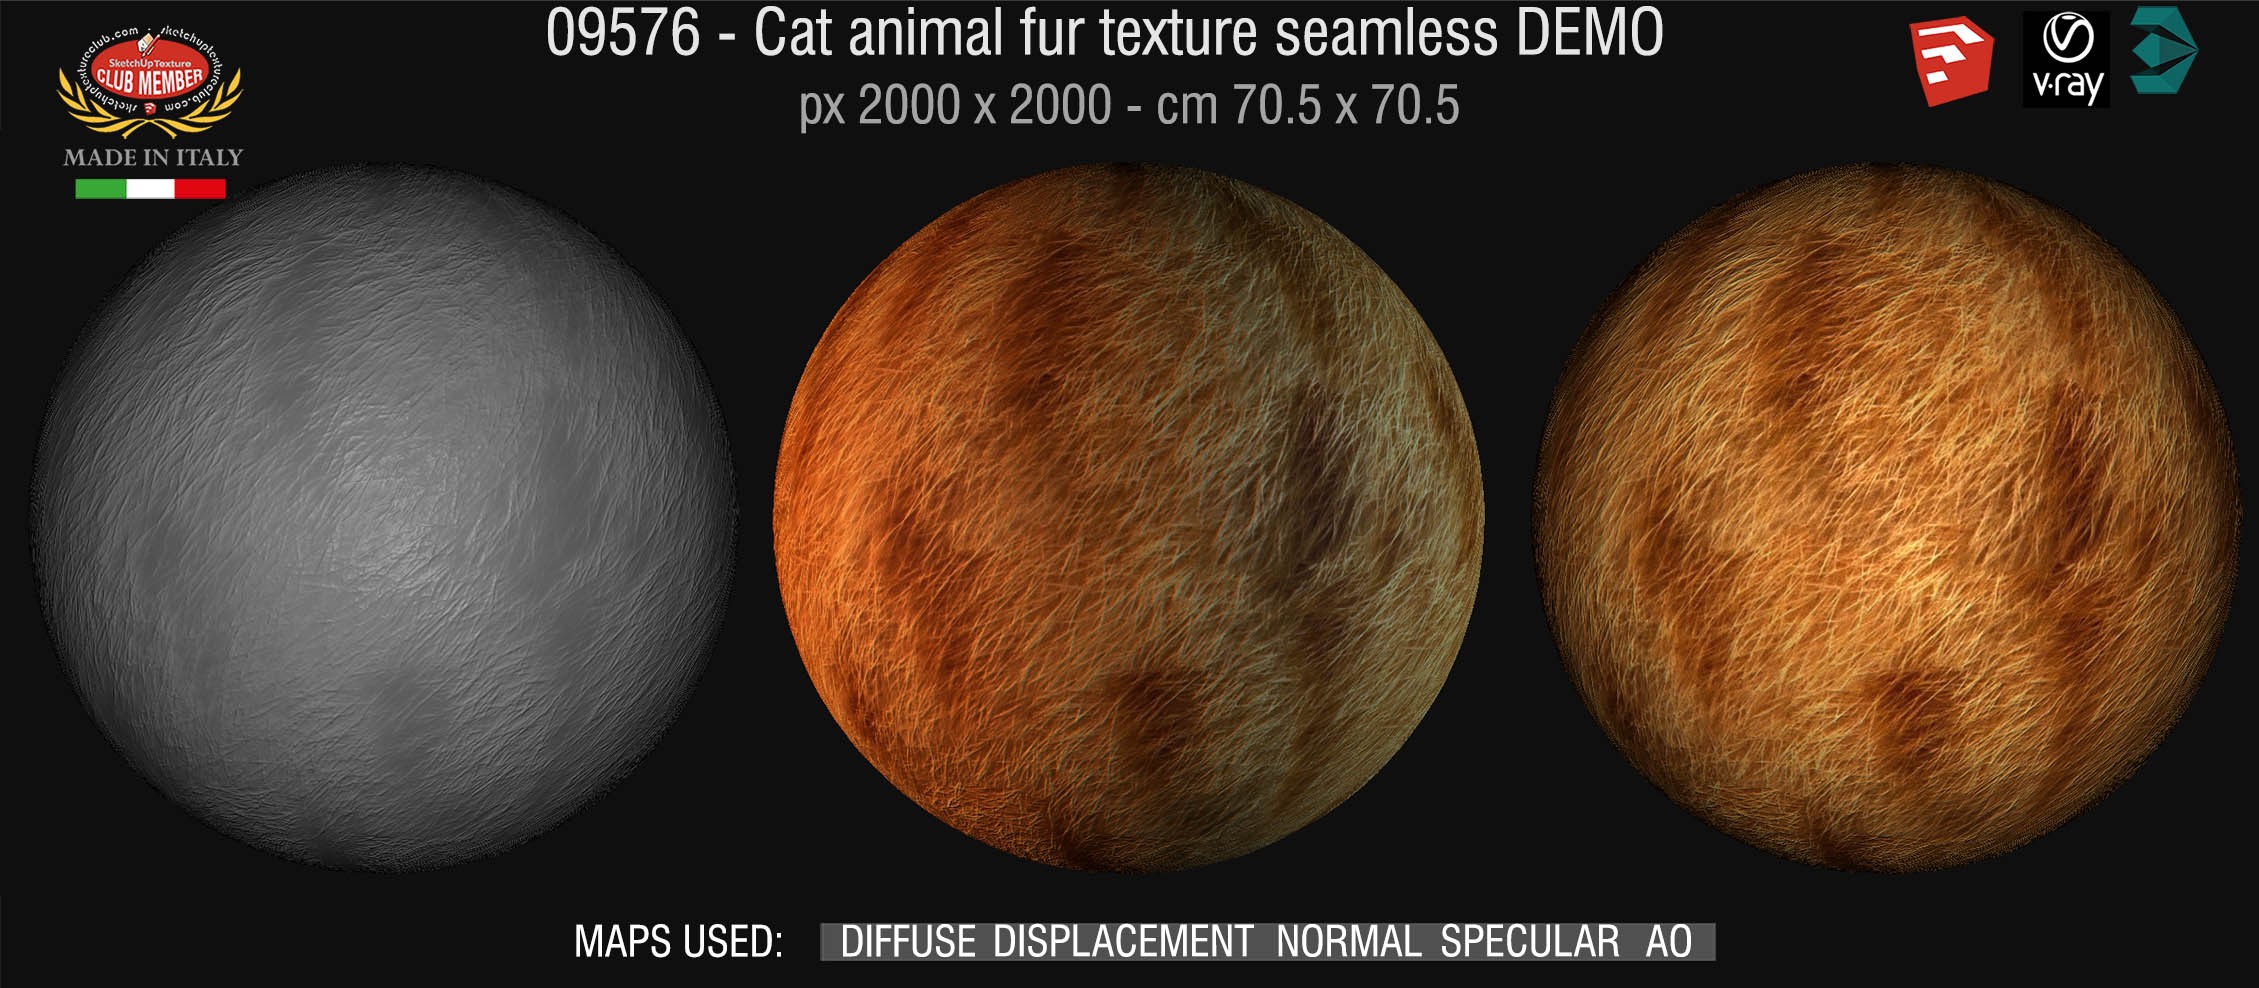 09576 HR Cat animal fur texture + maps DEMO